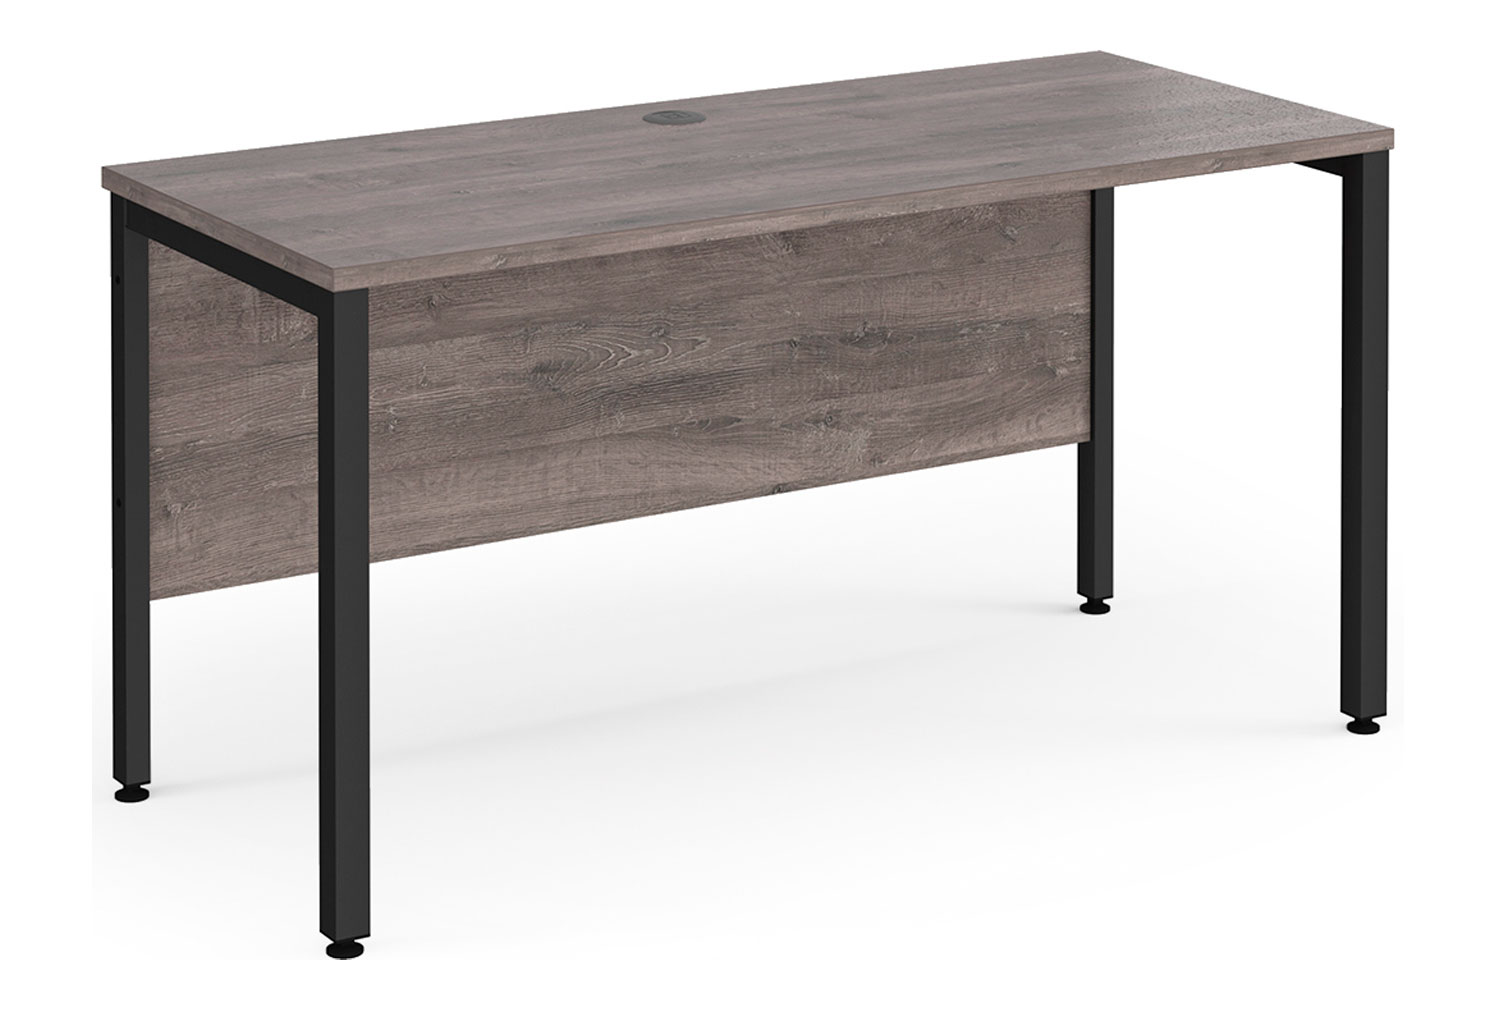 Value Line Deluxe Bench Narrow Rectangular Office Desks (Black Legs), 140wx60dx73h (cm), Grey Oak